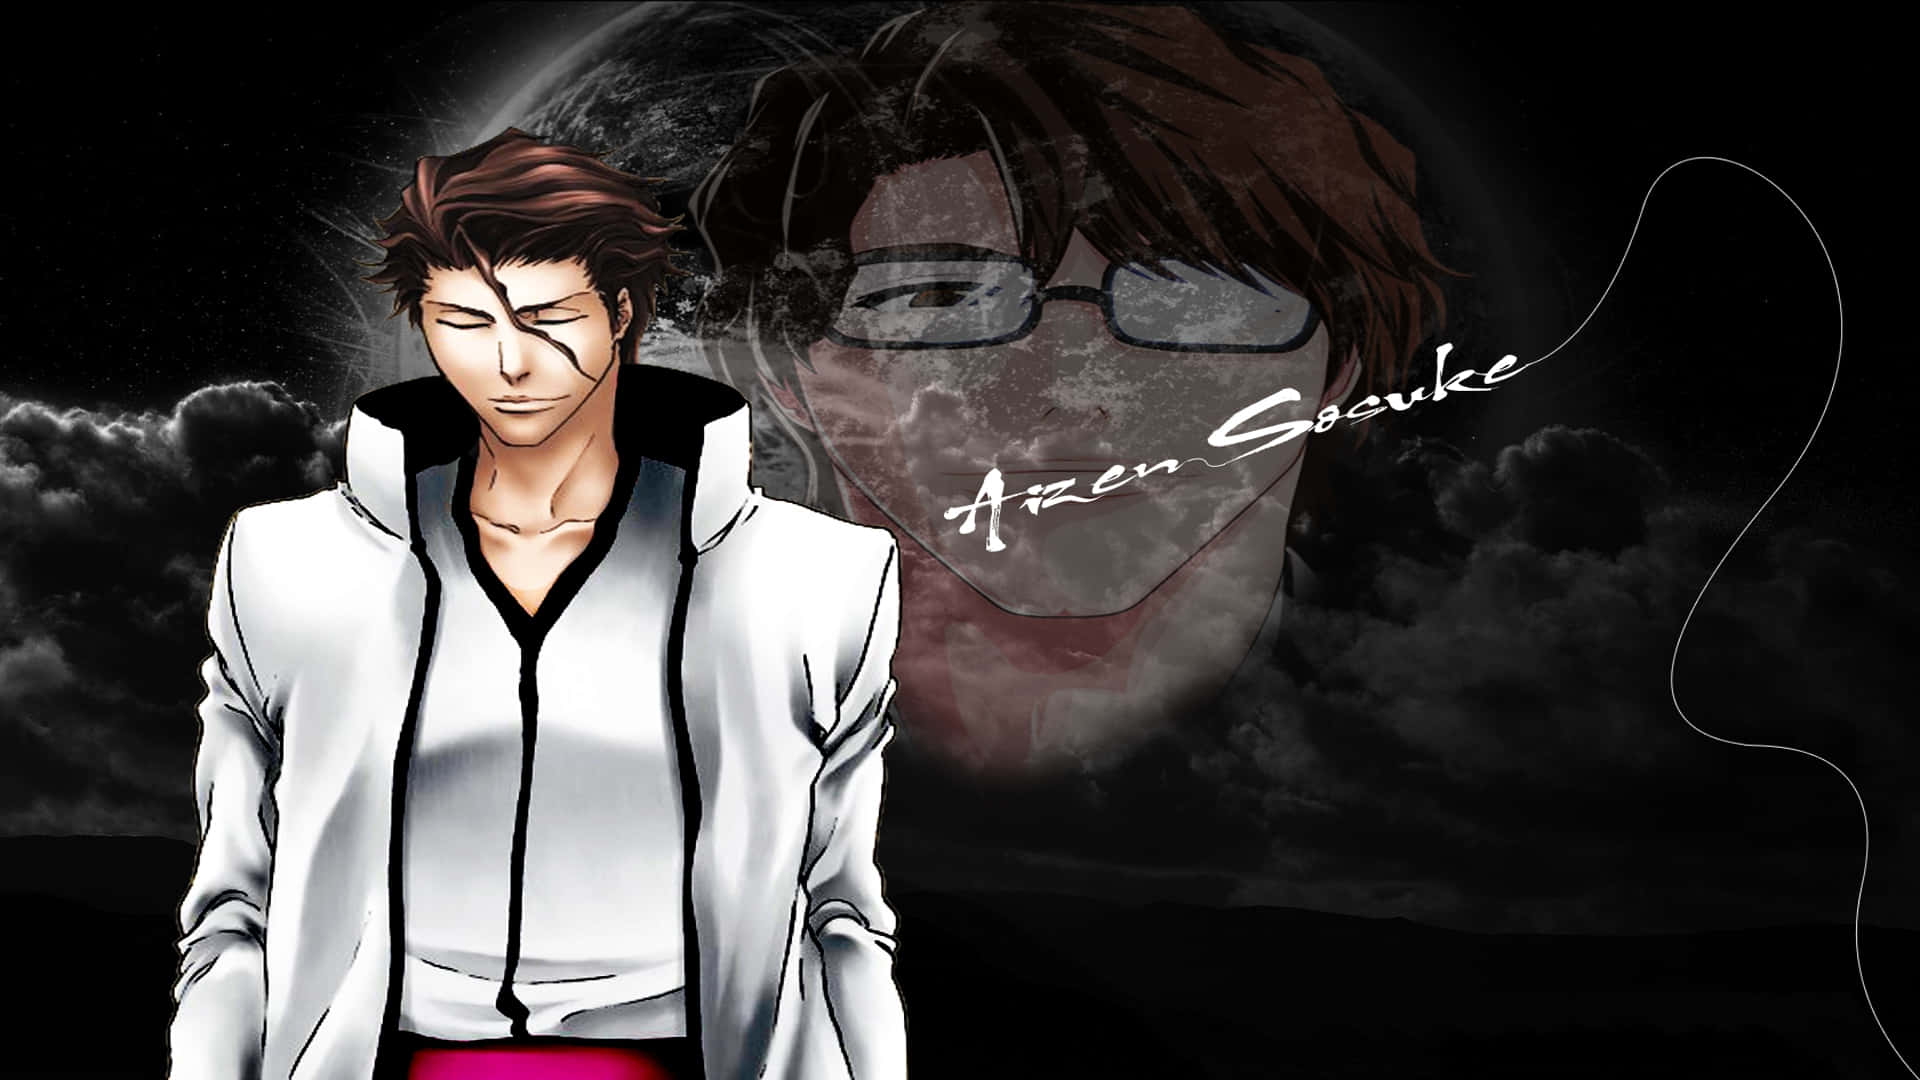 Sosuke Aizen, the sinister antagonist of the anime series Bleach Wallpaper